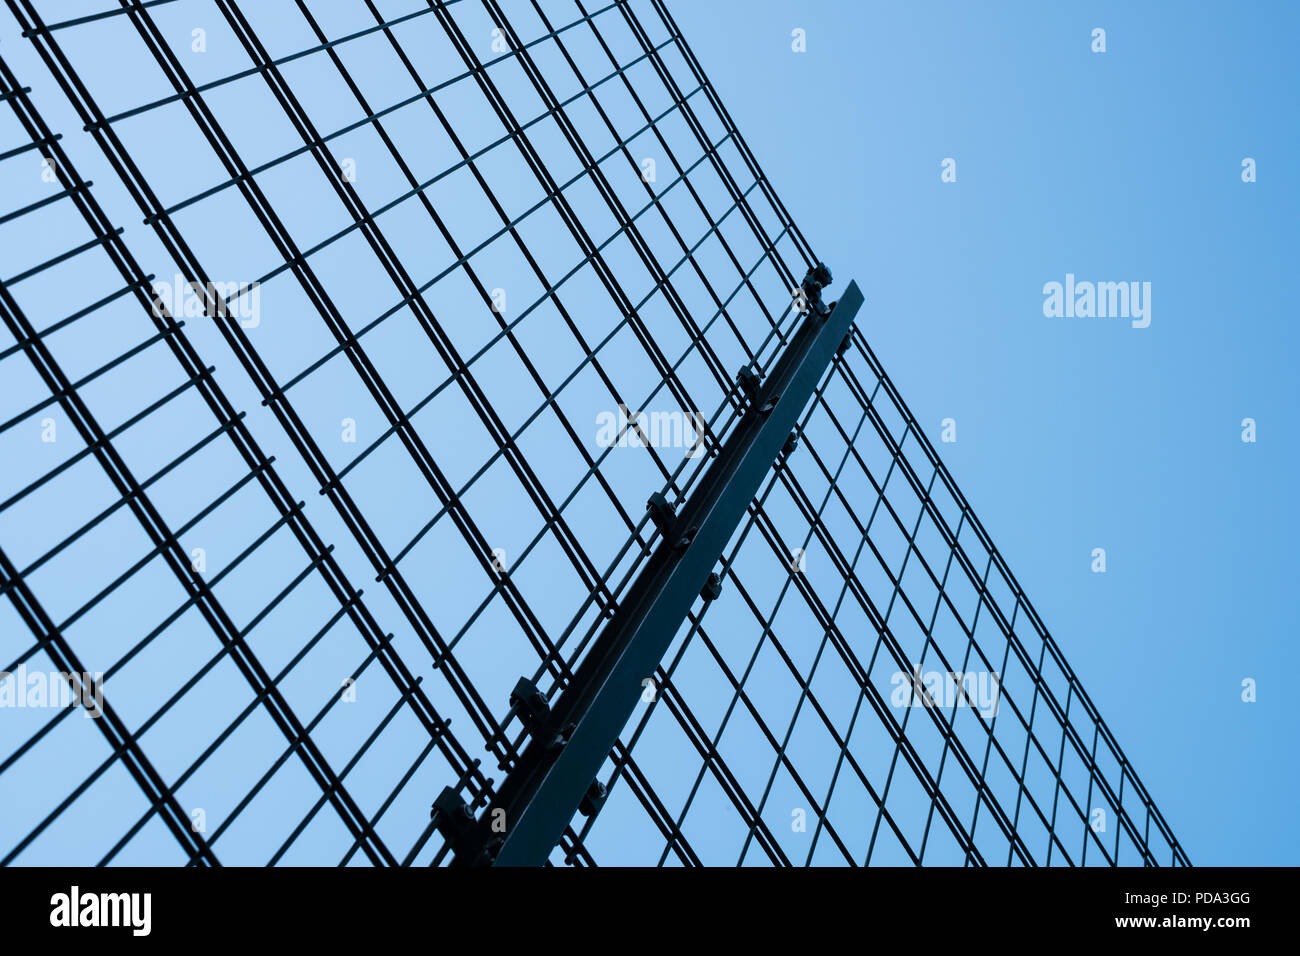 Metallzaun auf blauen Himmel - metallgitter Bau - Stockfoto